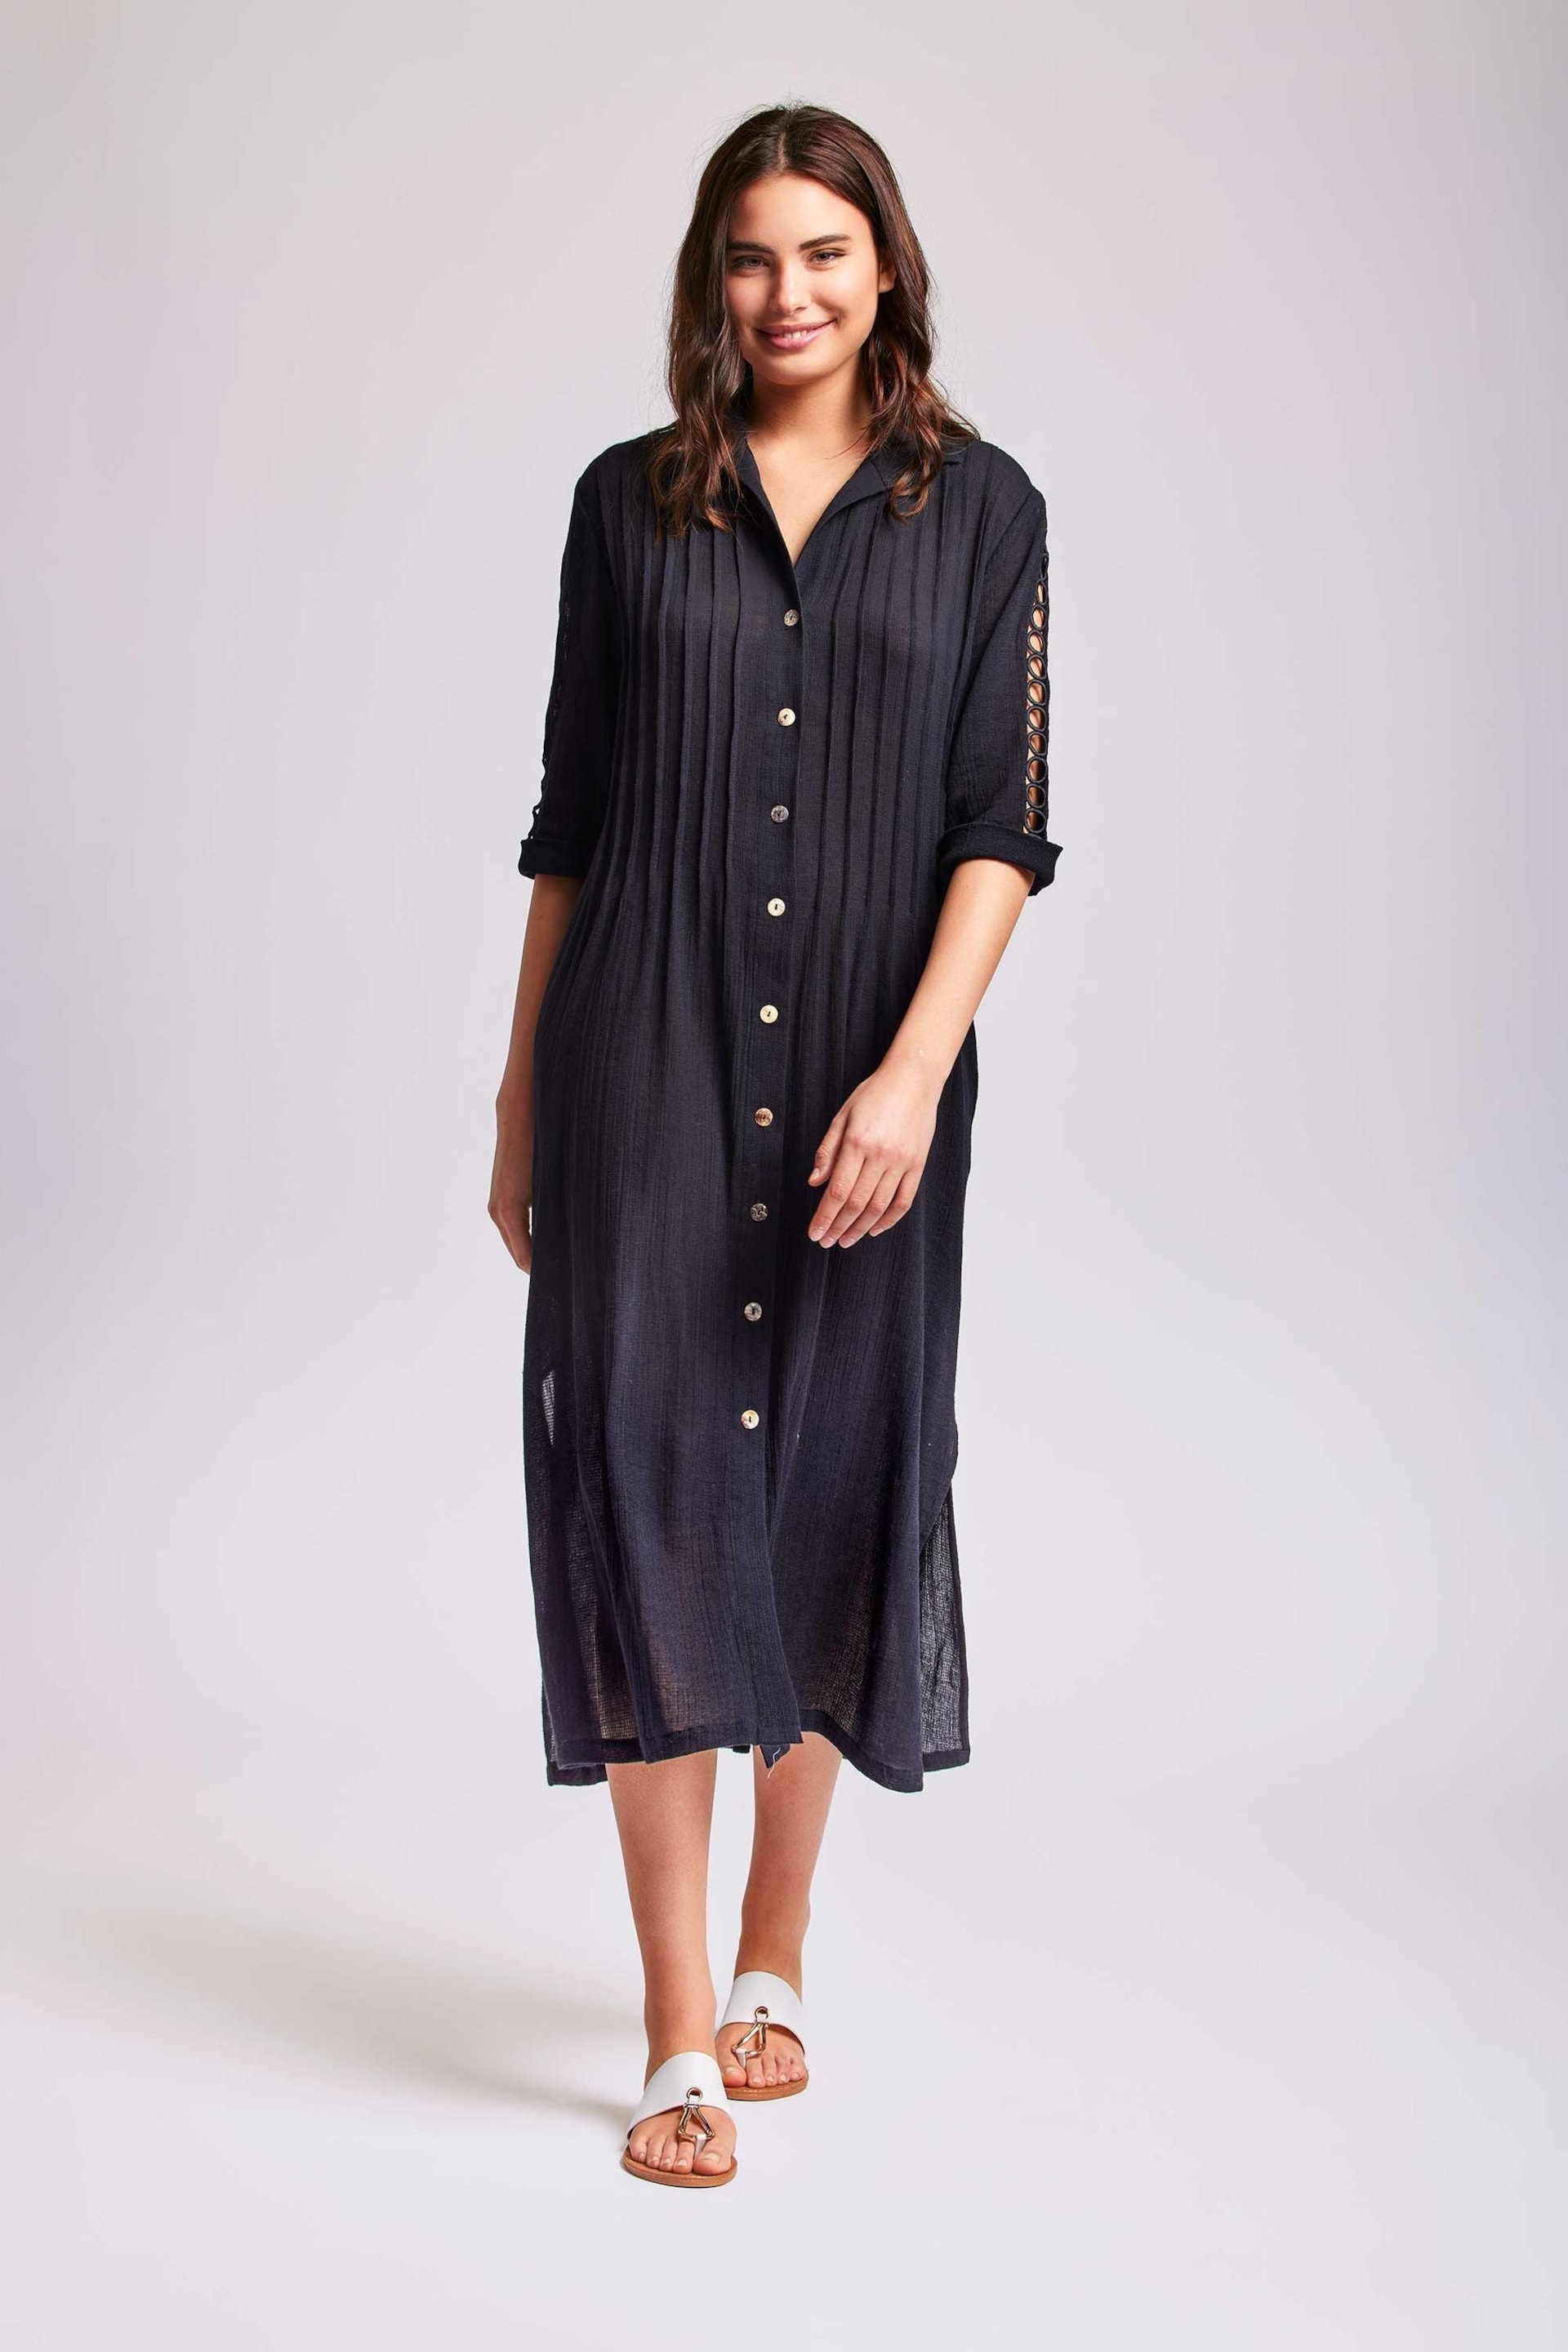 Iconique Olivia Maxi Shirt Beach Black Dress - Image 3 of 3